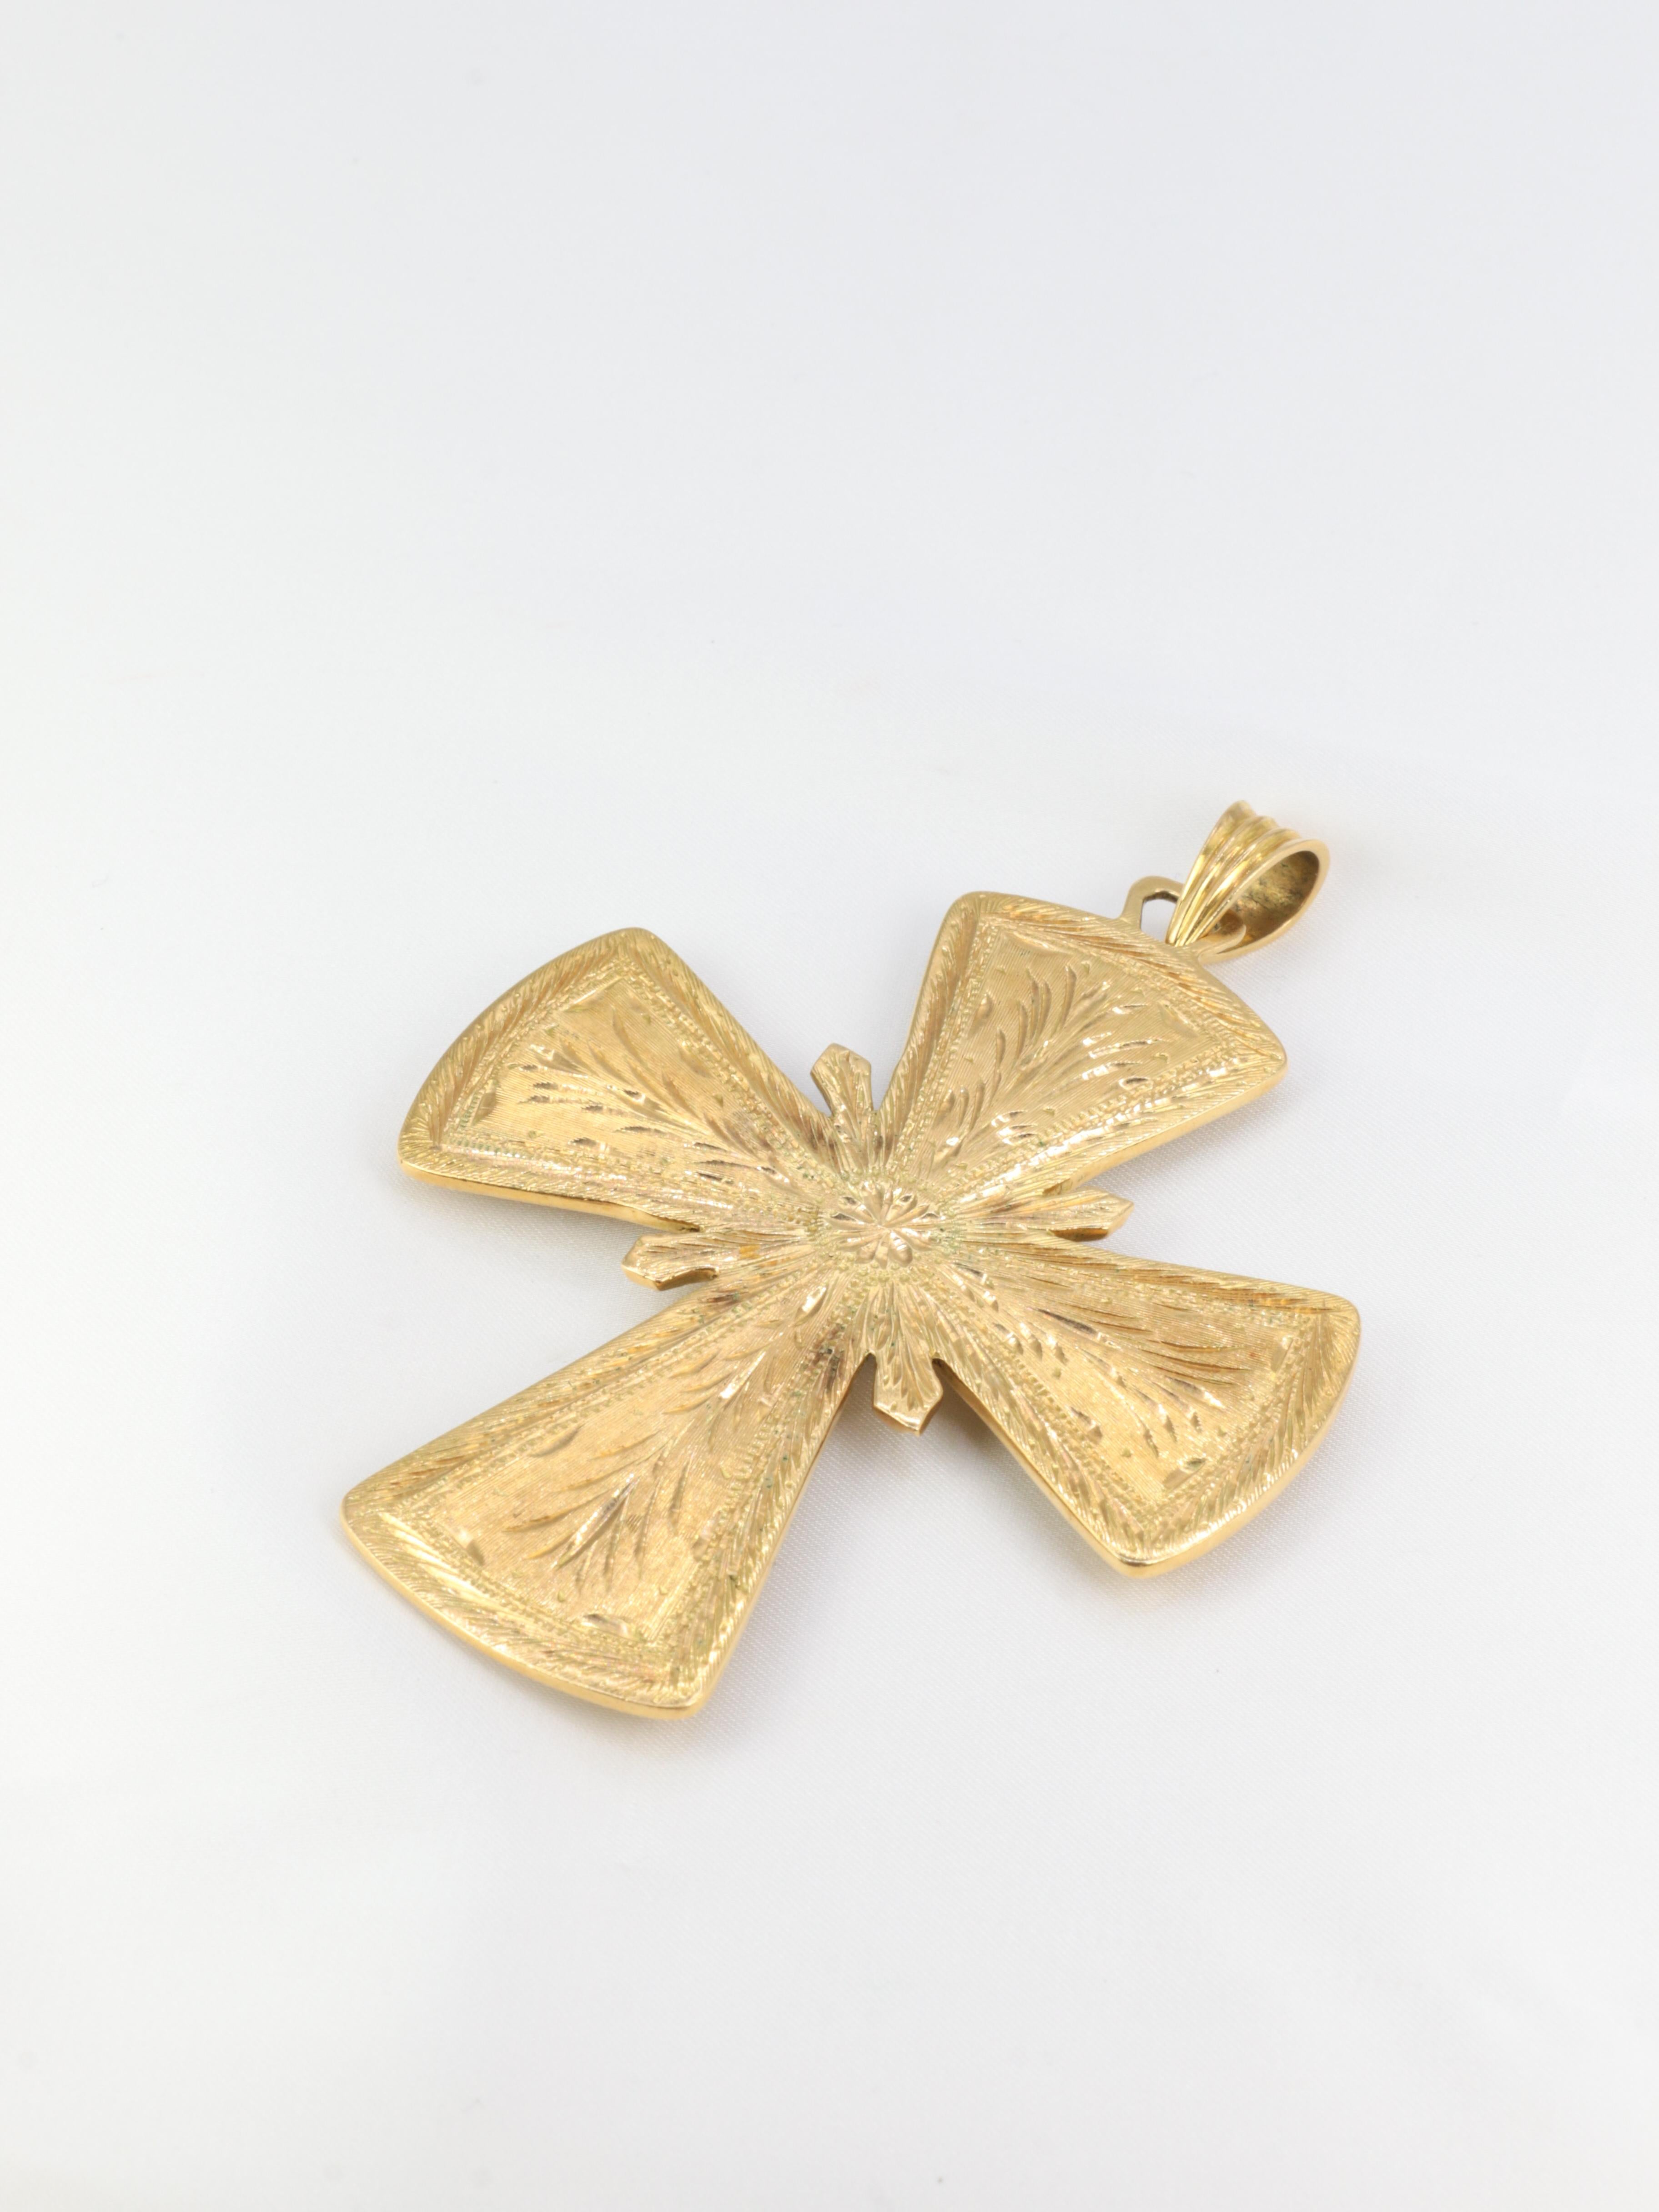 Vintage Gold, Enamel and Sapphire Pectoral Cross Pendant For Sale 2